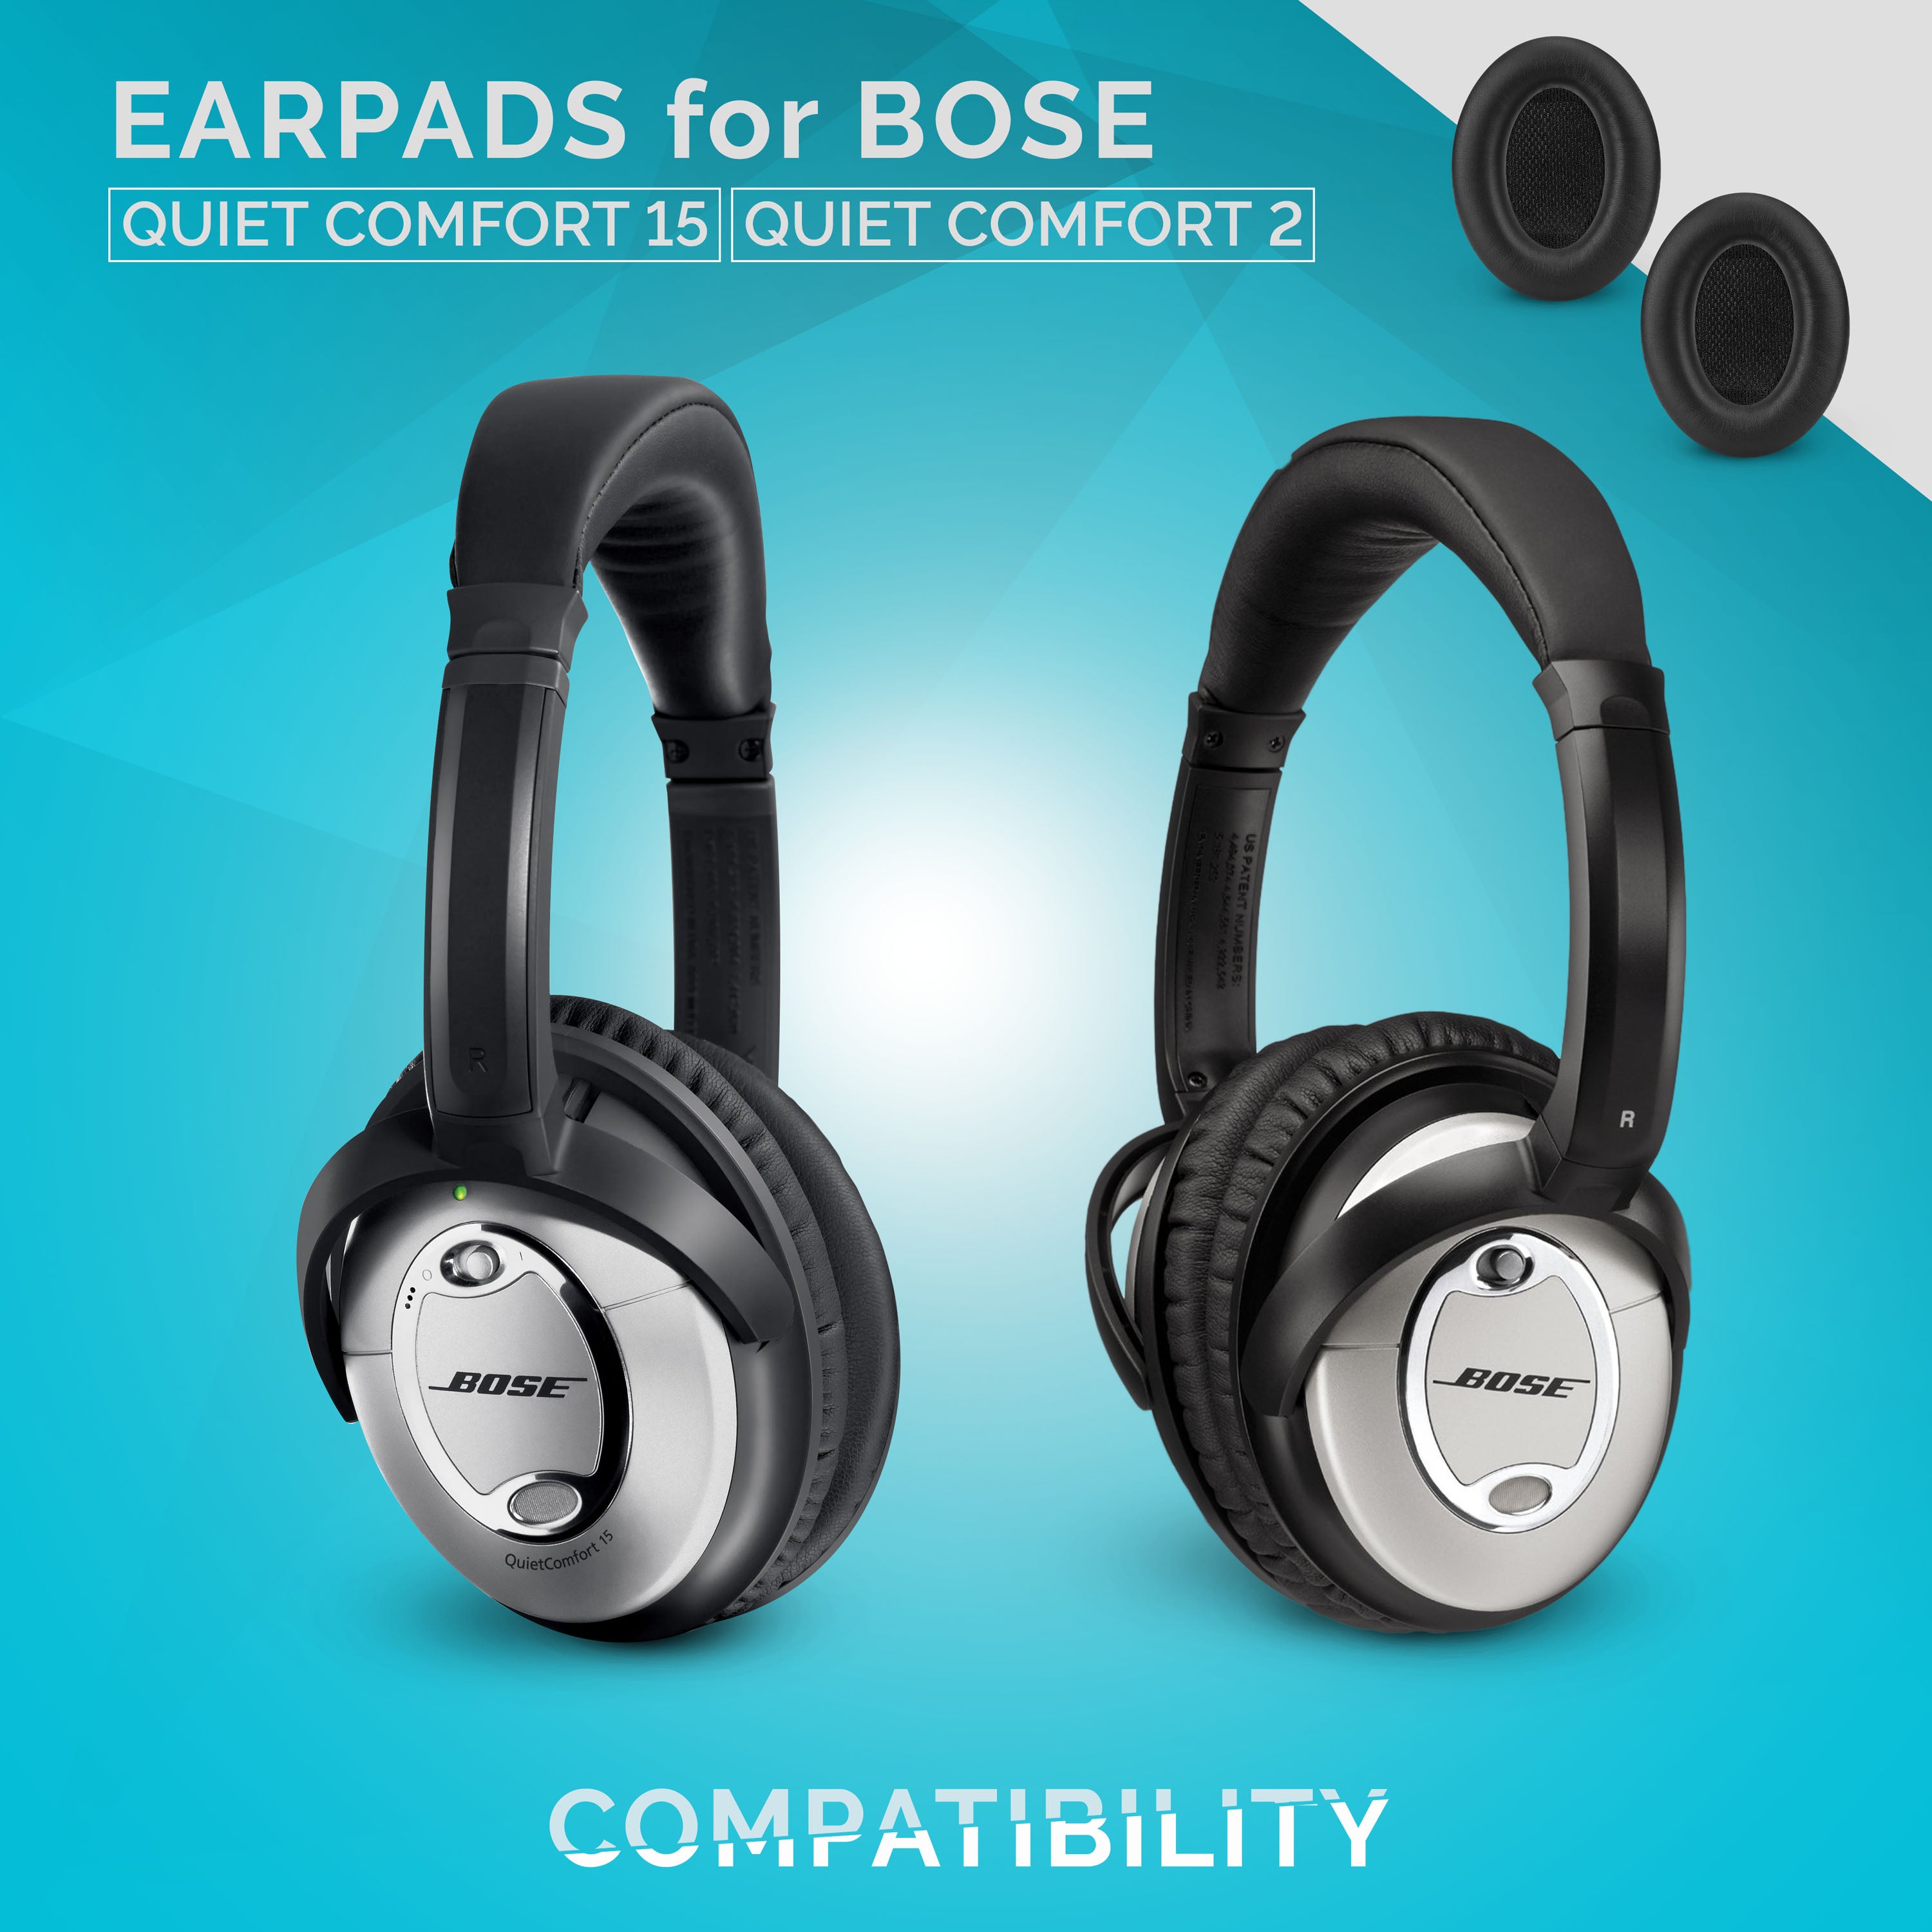 Bose QC45 Replacement Premium Earpads - Brainwavz Audio